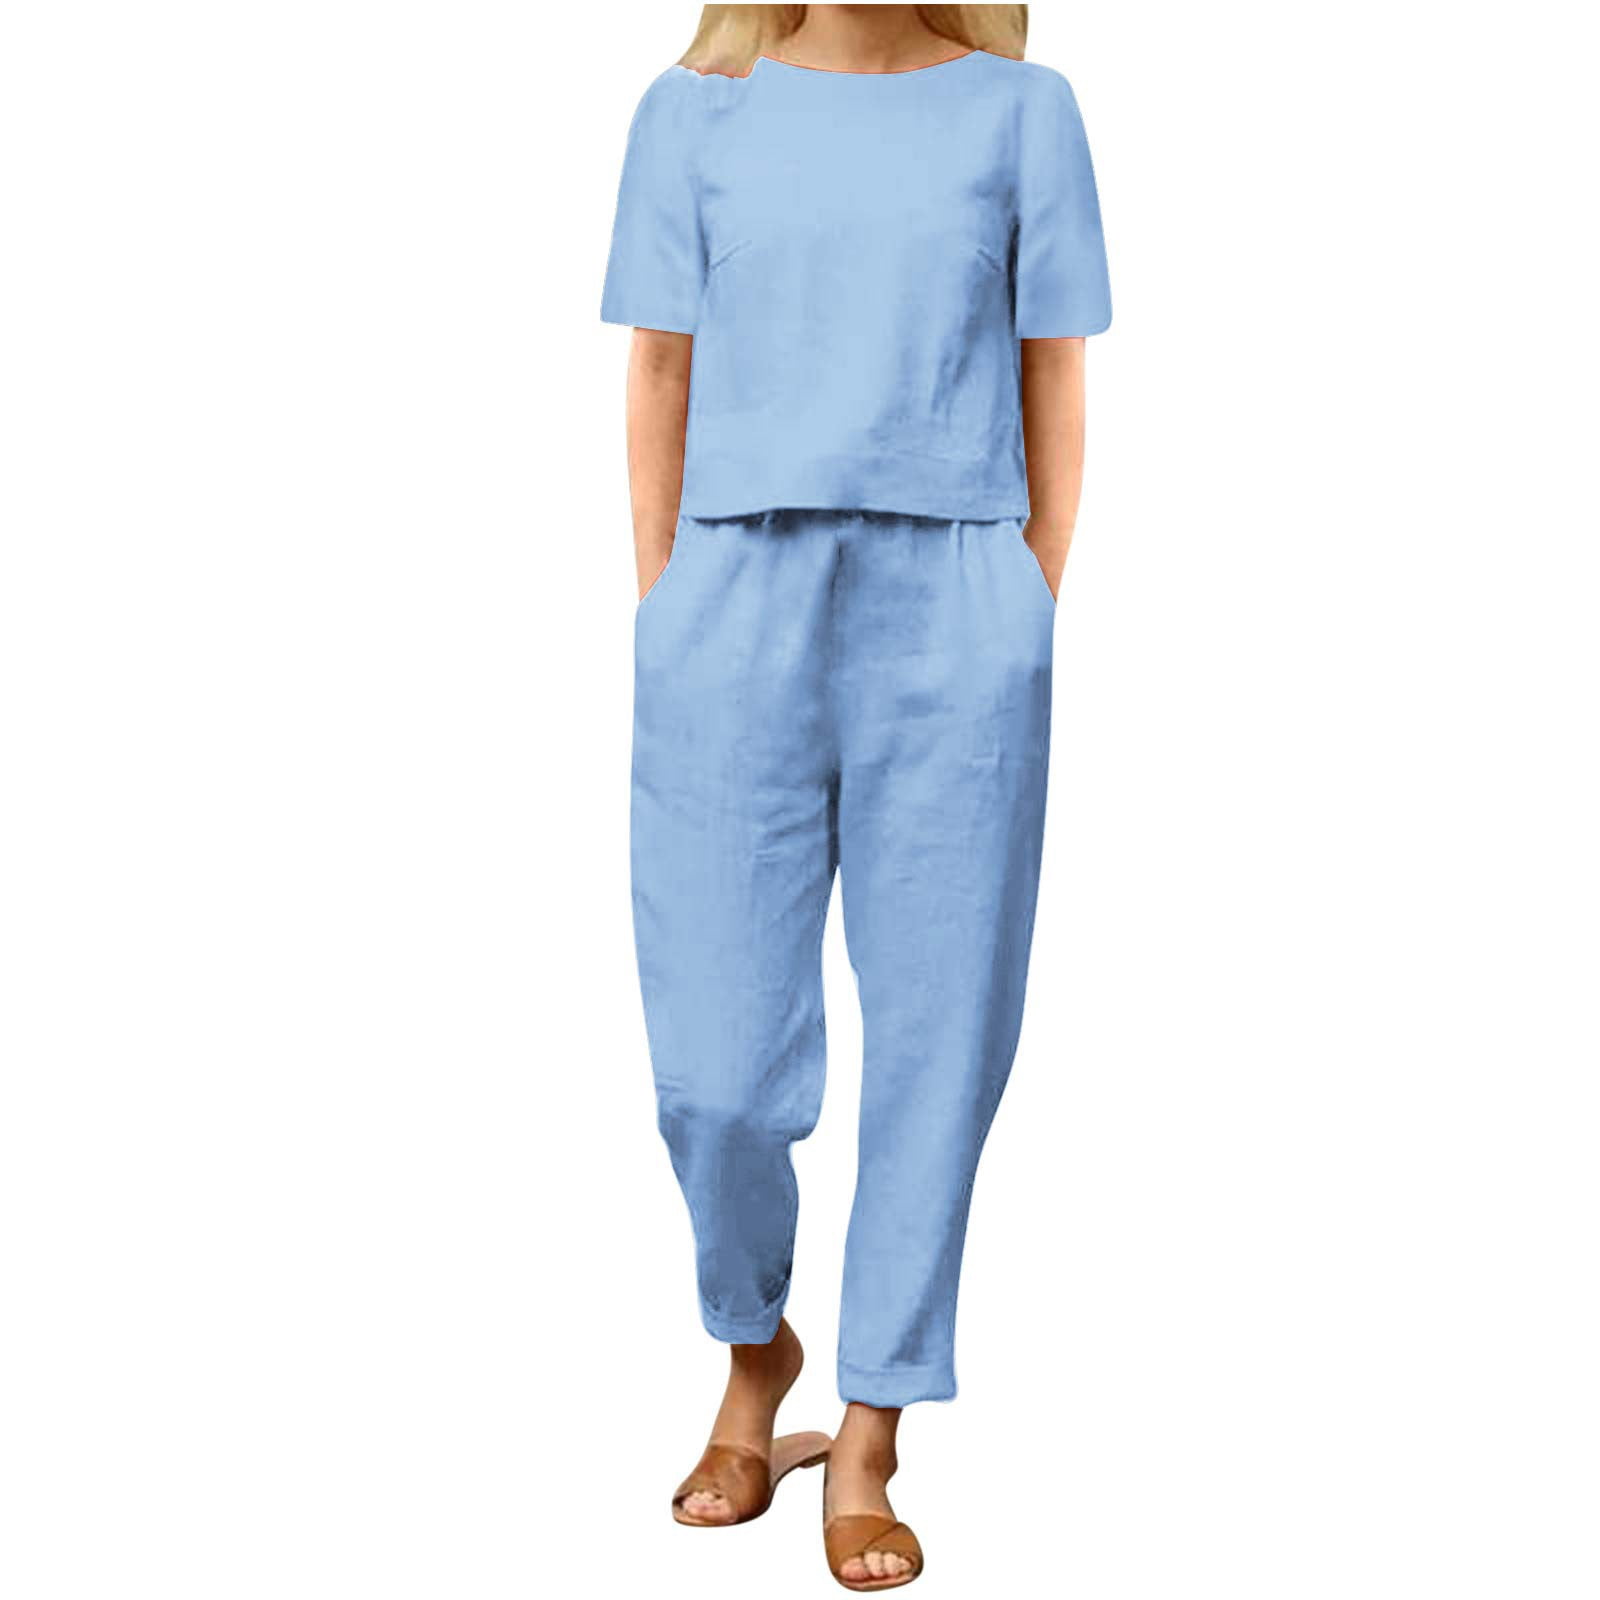 yievot Women's Pajamas Set Cotton Linen Lounge Sets Short Sleeve Top ...